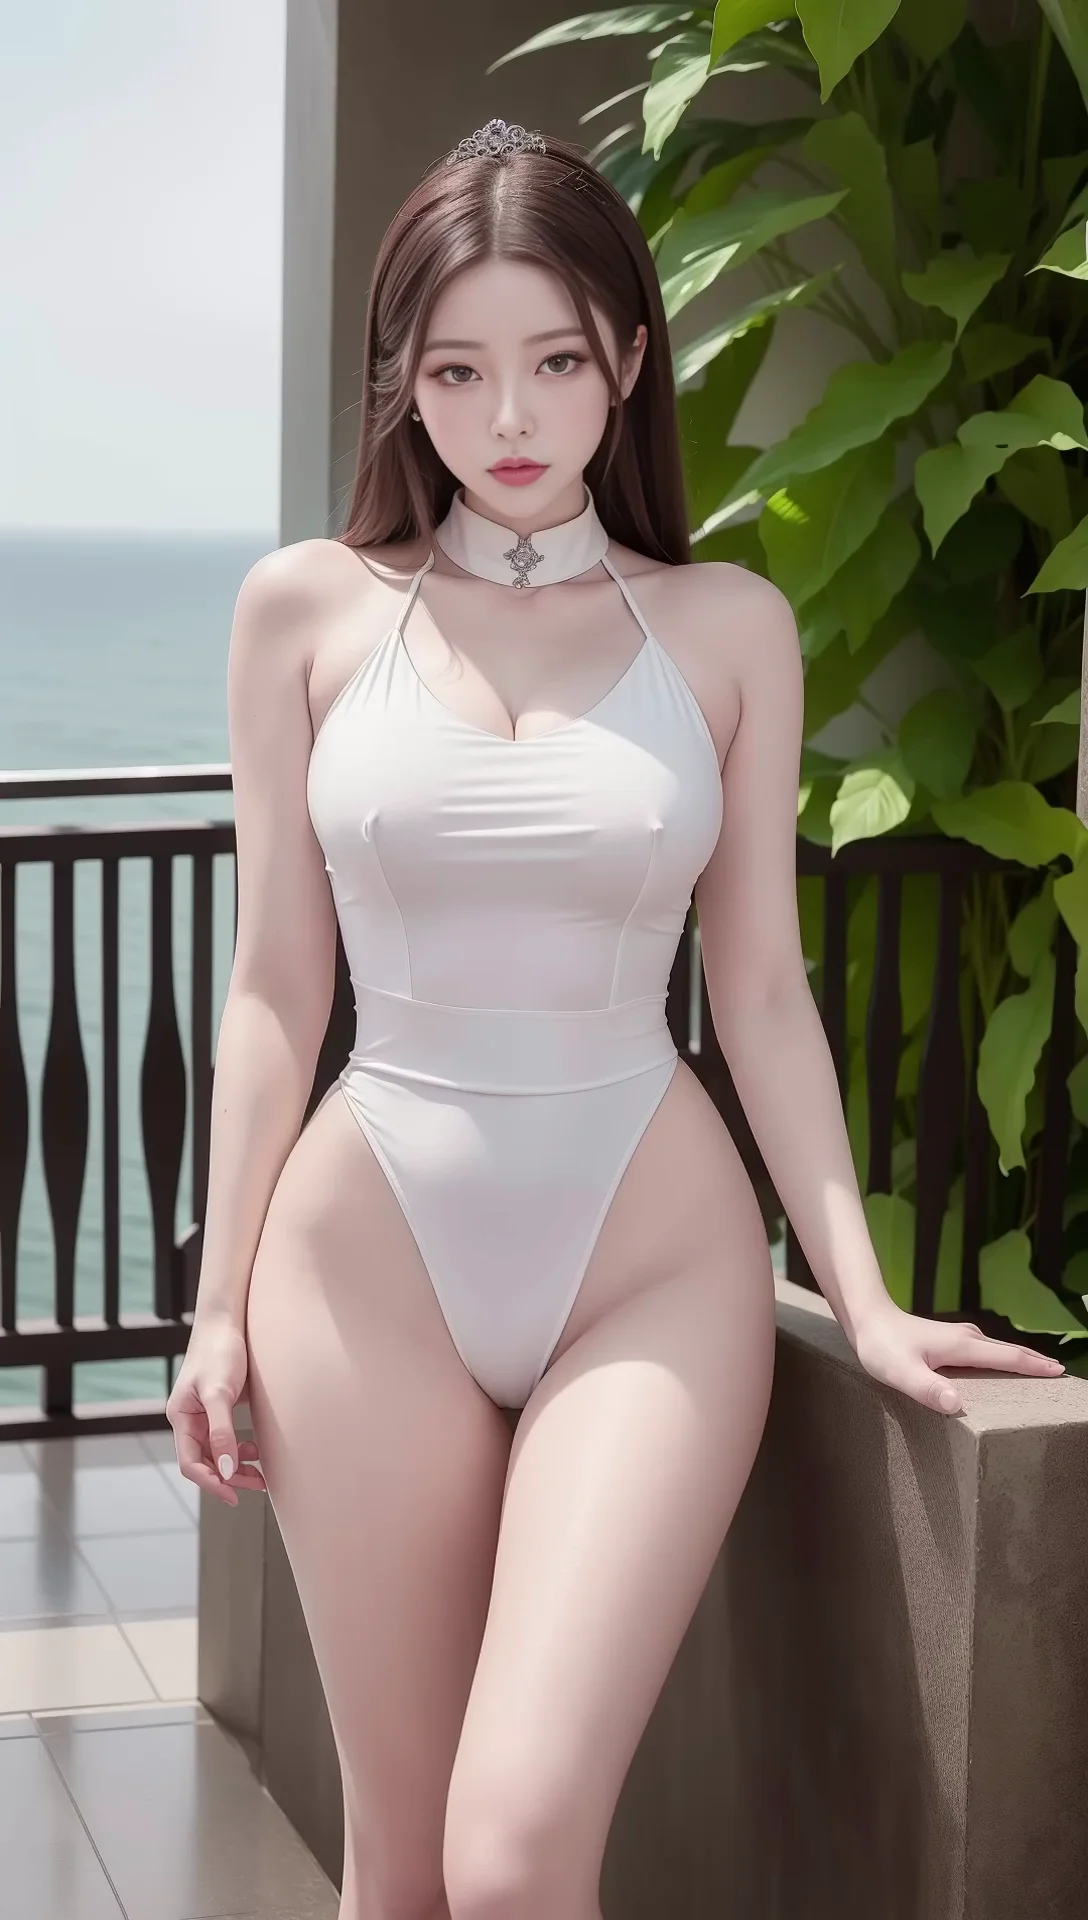 Ai Art Lookbook: Sexy Girl Swimsuit on the Resort Terrace Image 21